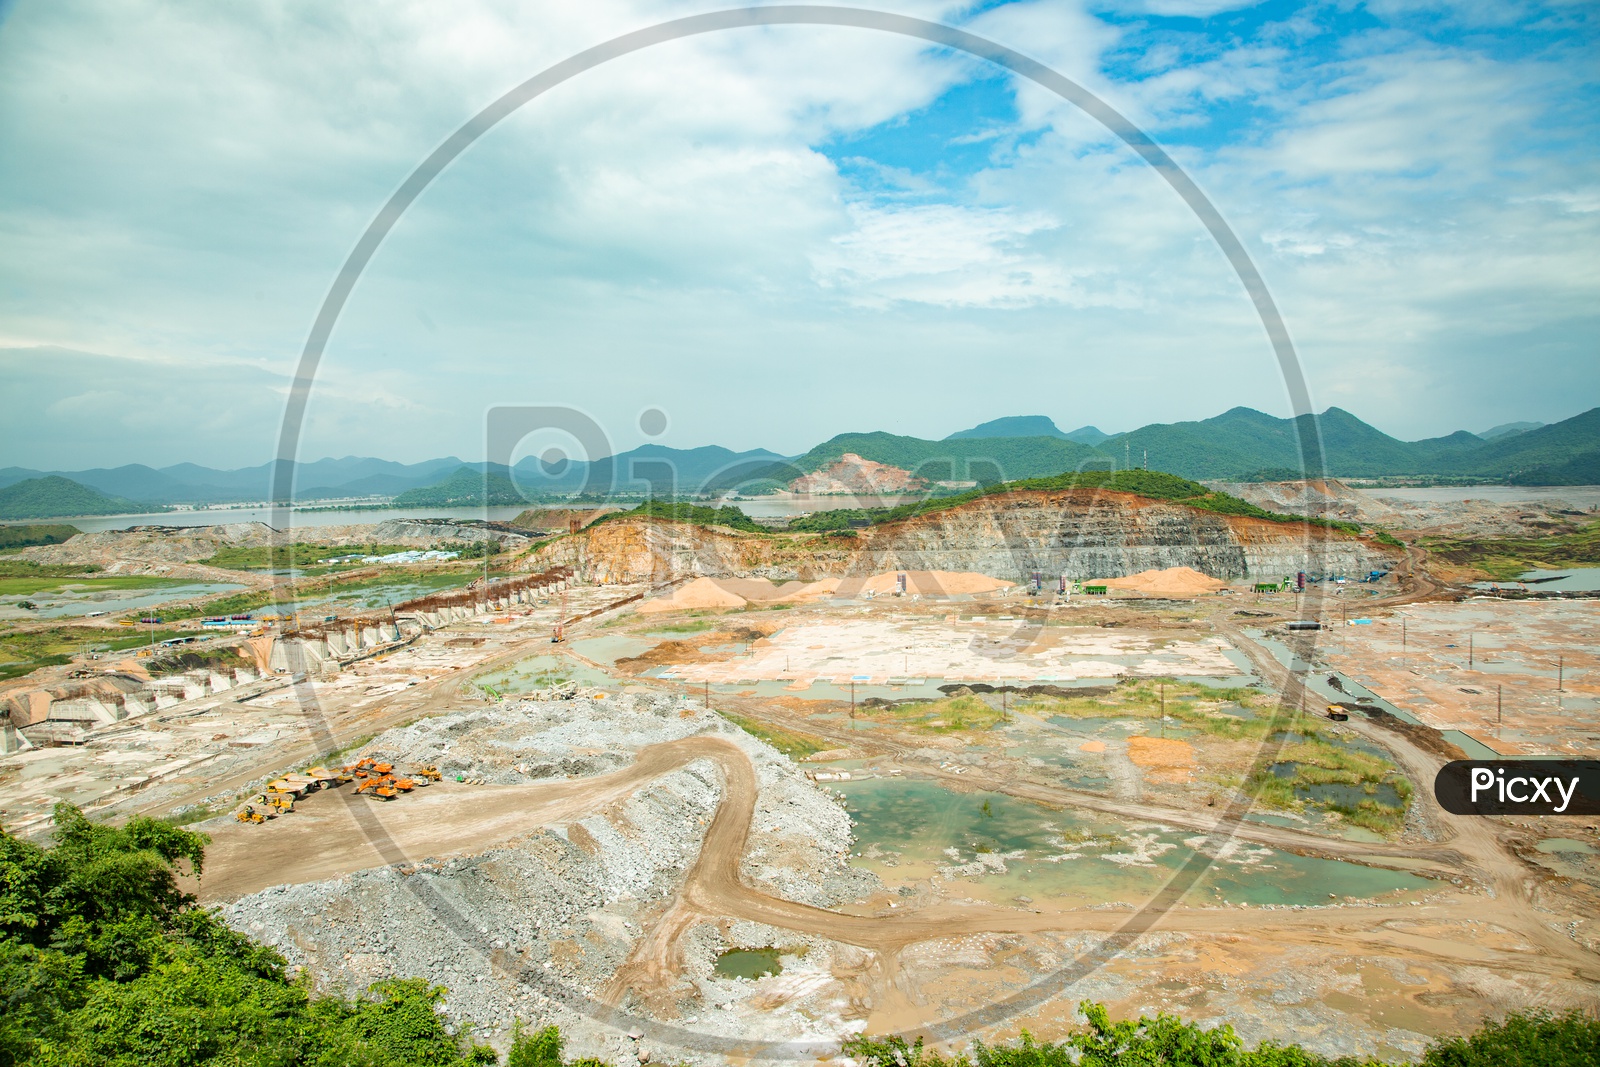 Polavaram Project Dam Construction Site.